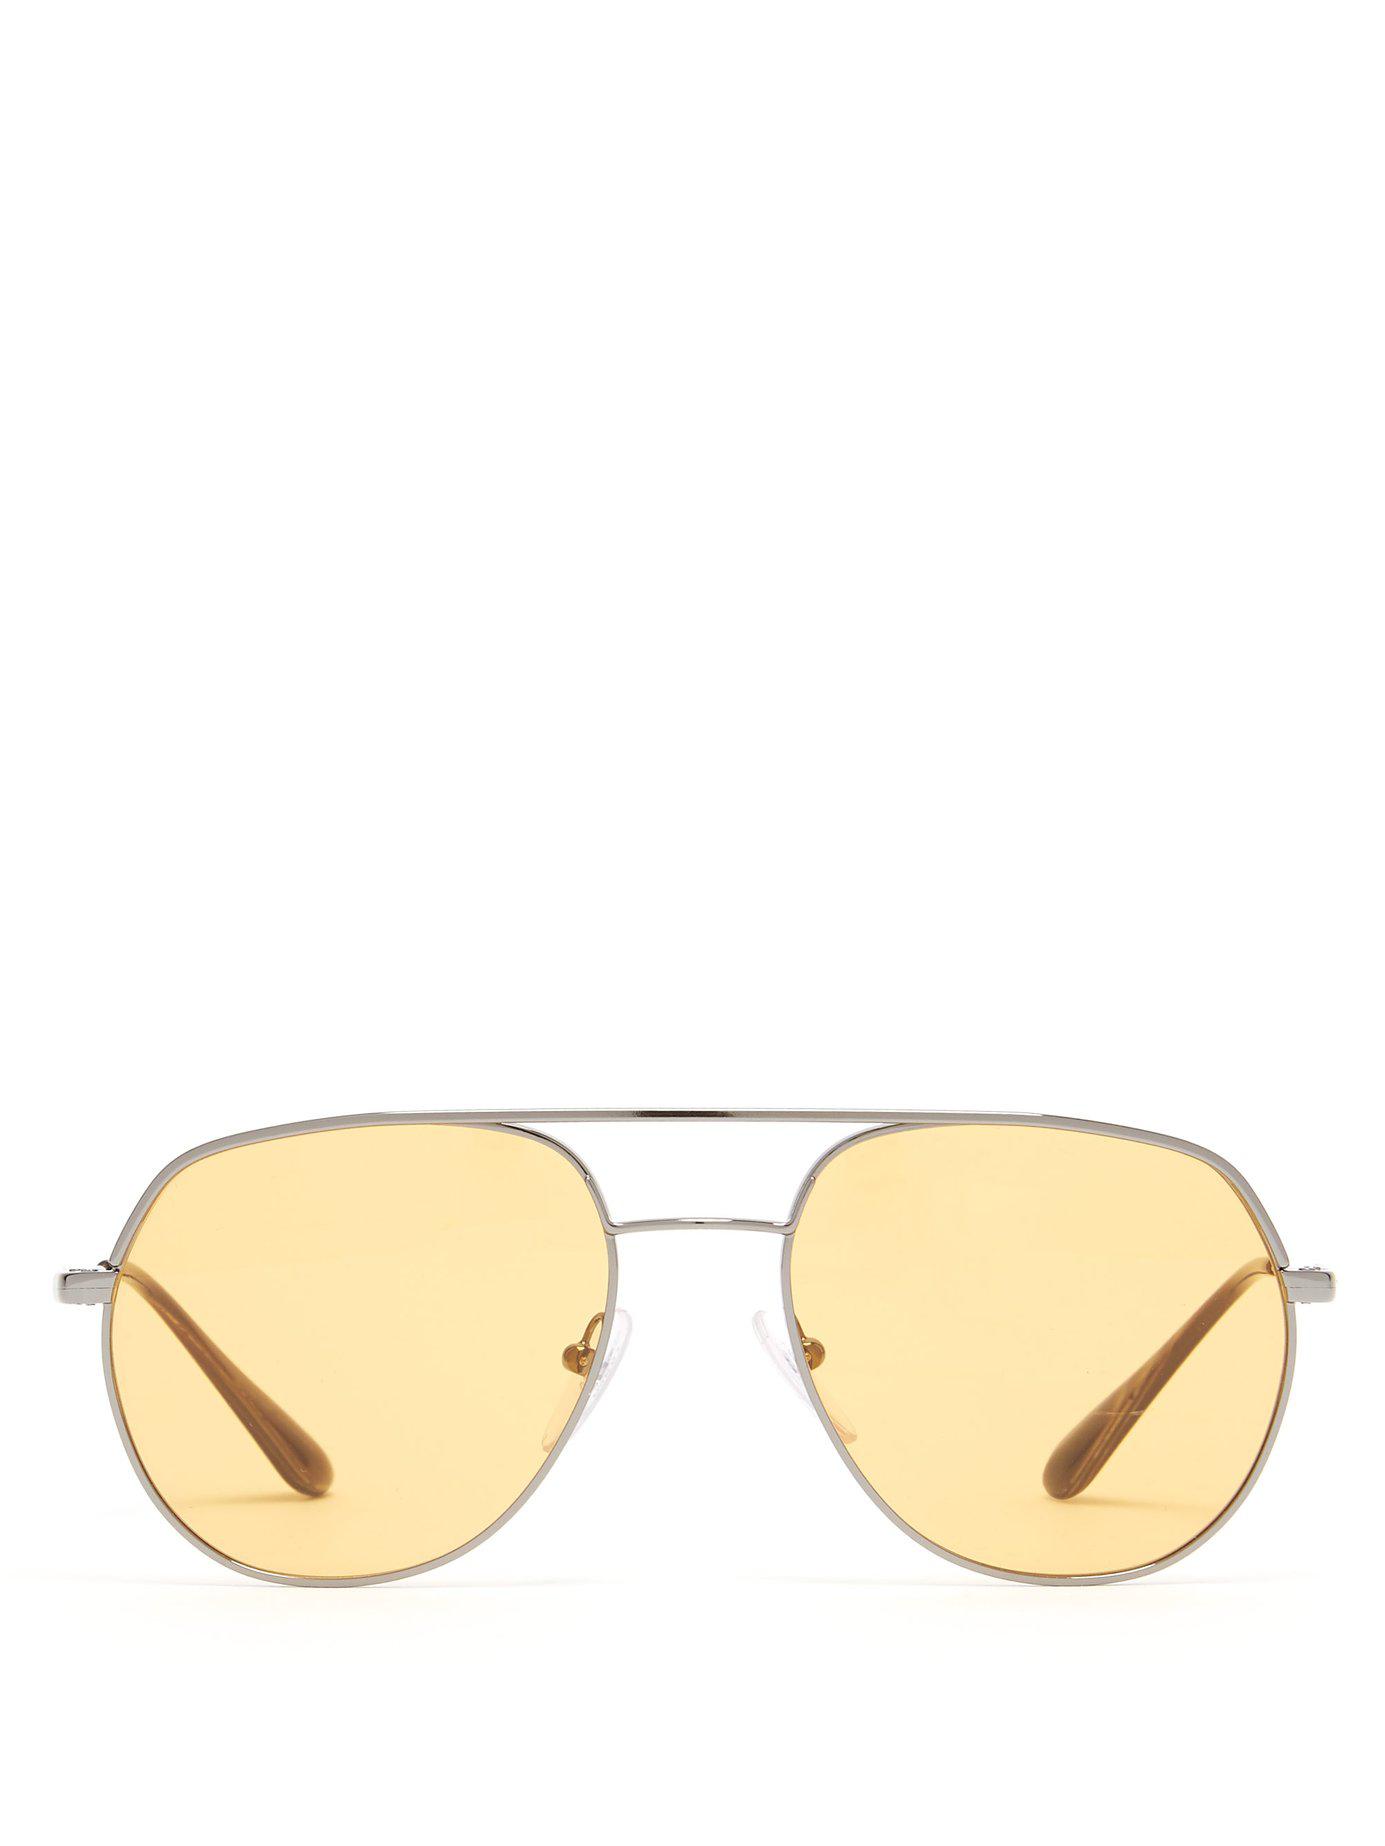 Prada Yellow Tinted Aviator Sunglasses in Metallic for Men | Lyst